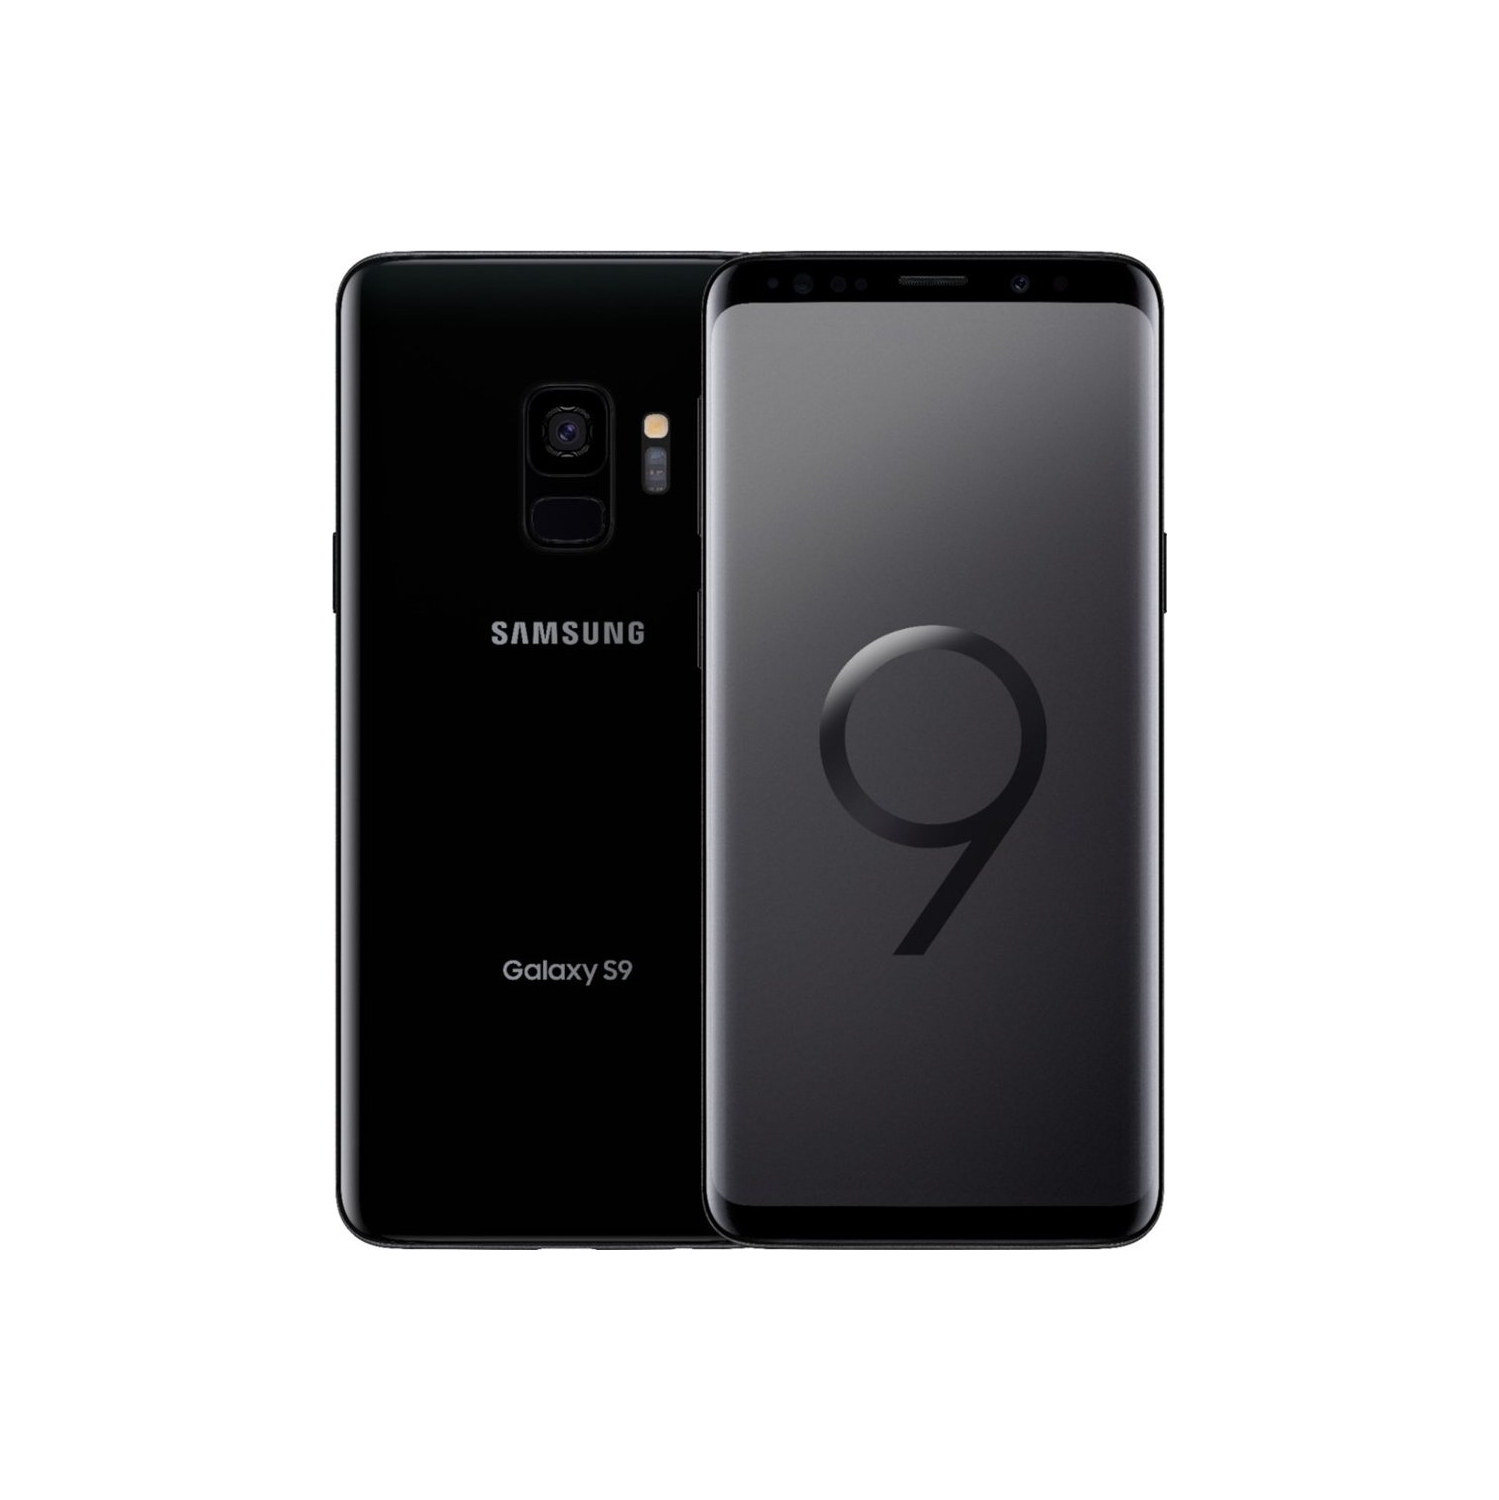 Refurbished (Excellent) - Samsung Galaxy S9 64GB Smartphone - Midnight Black - Unlocked - Certified Refurbished